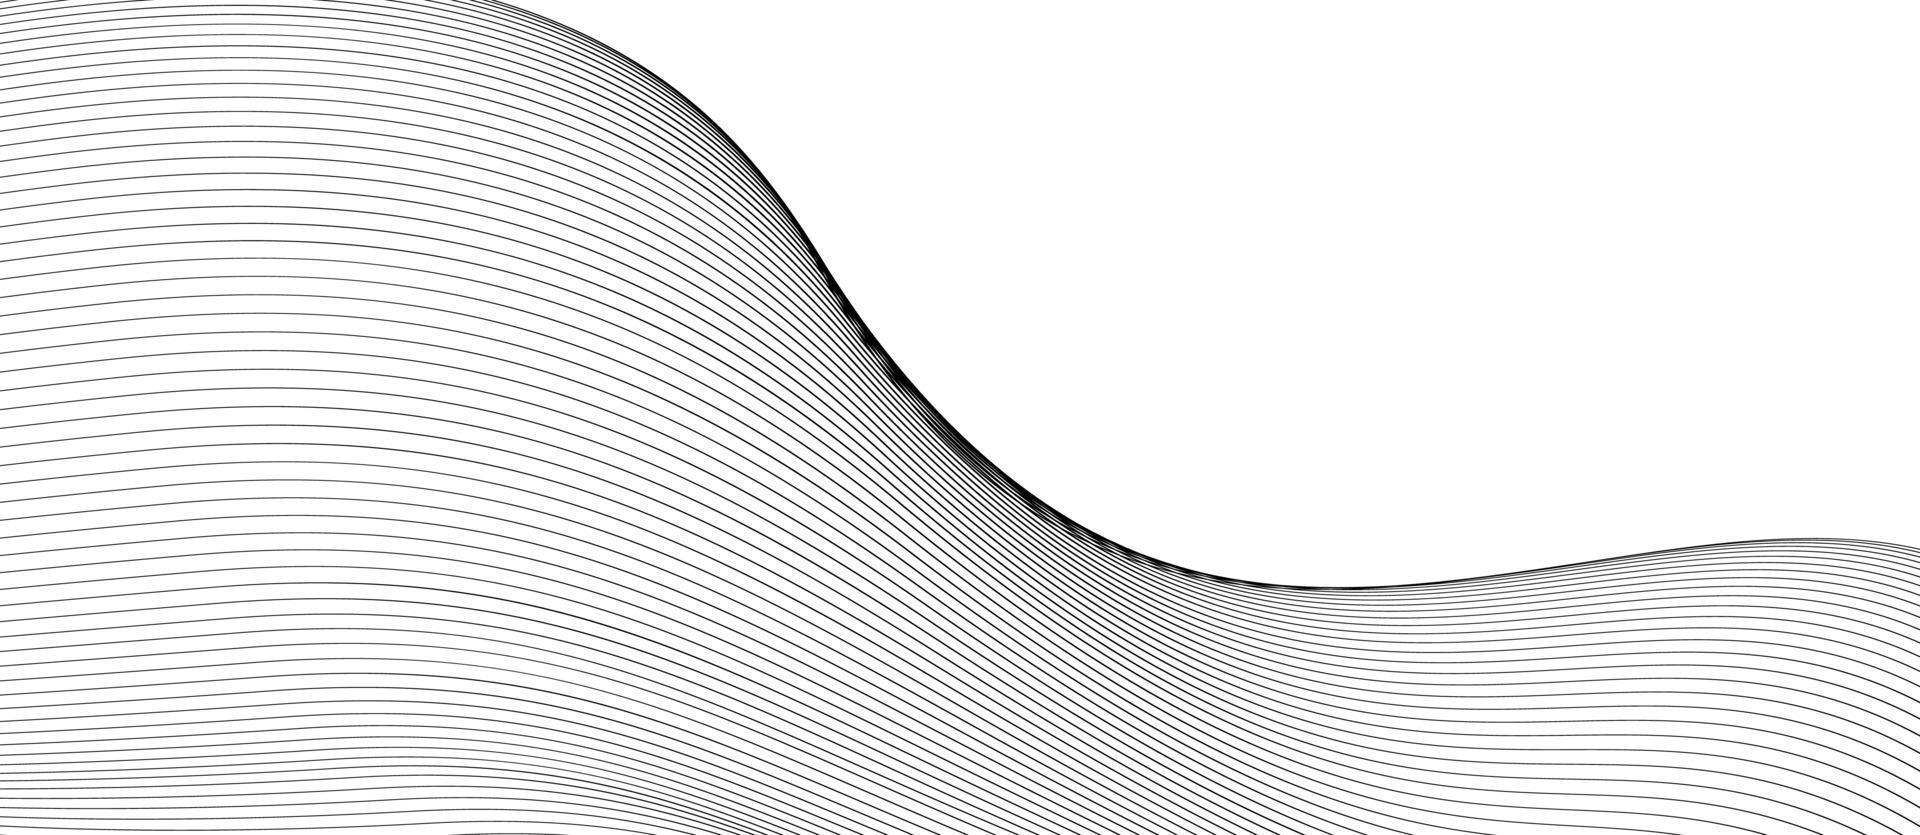 projeto de linha topográfica. design de onda de linhas de fundo. vetor de fundo de linha de listra diagonal gradiente branco